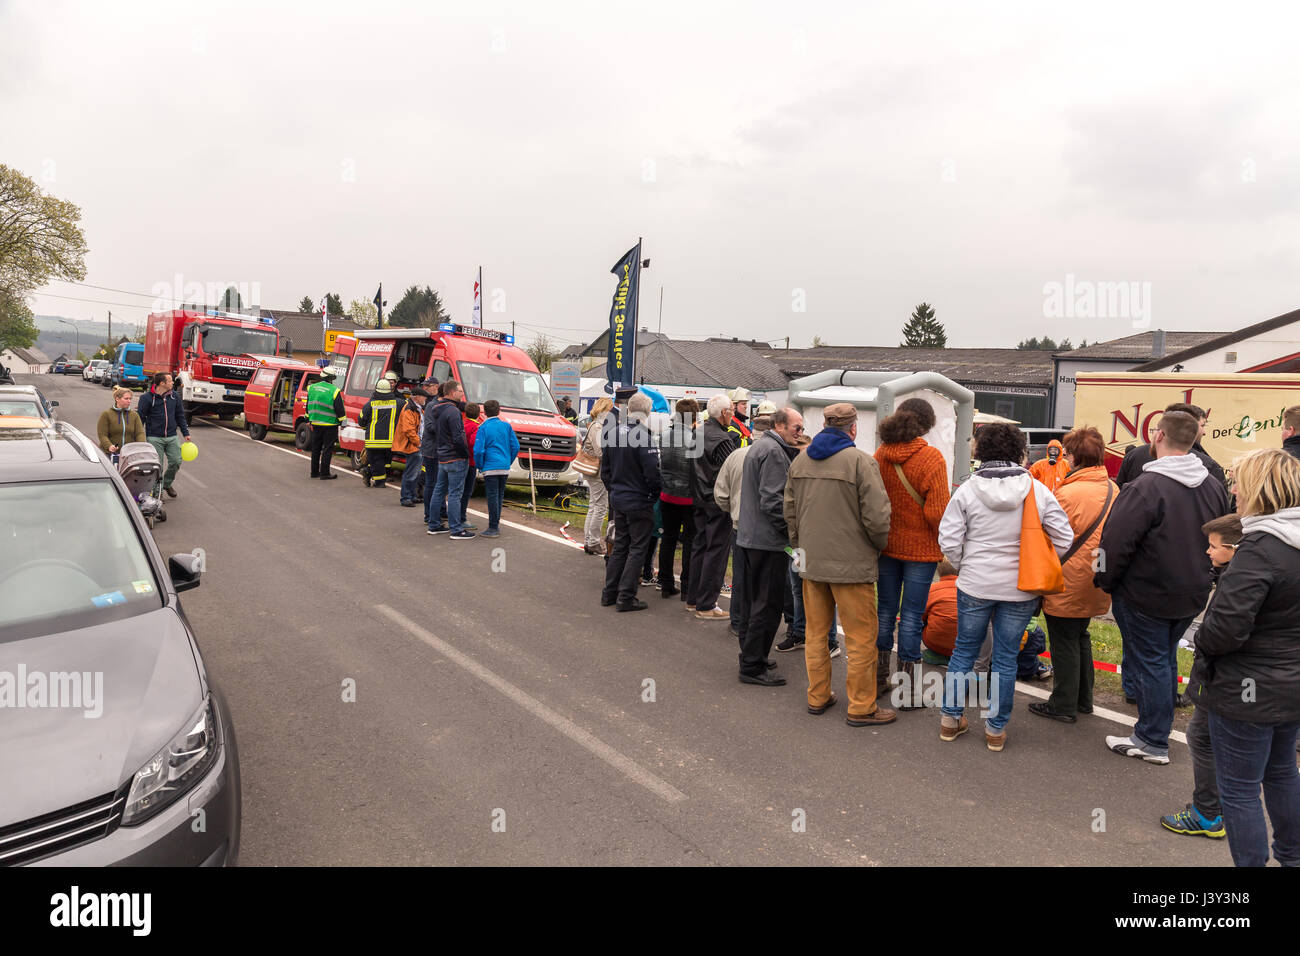 Fireman demonstrate how to handle hazardous material - public demonstration May 2017 in Bleialf, Eifel, Rheinland-Pfalz, Germany, Europe, EU Stock Photo